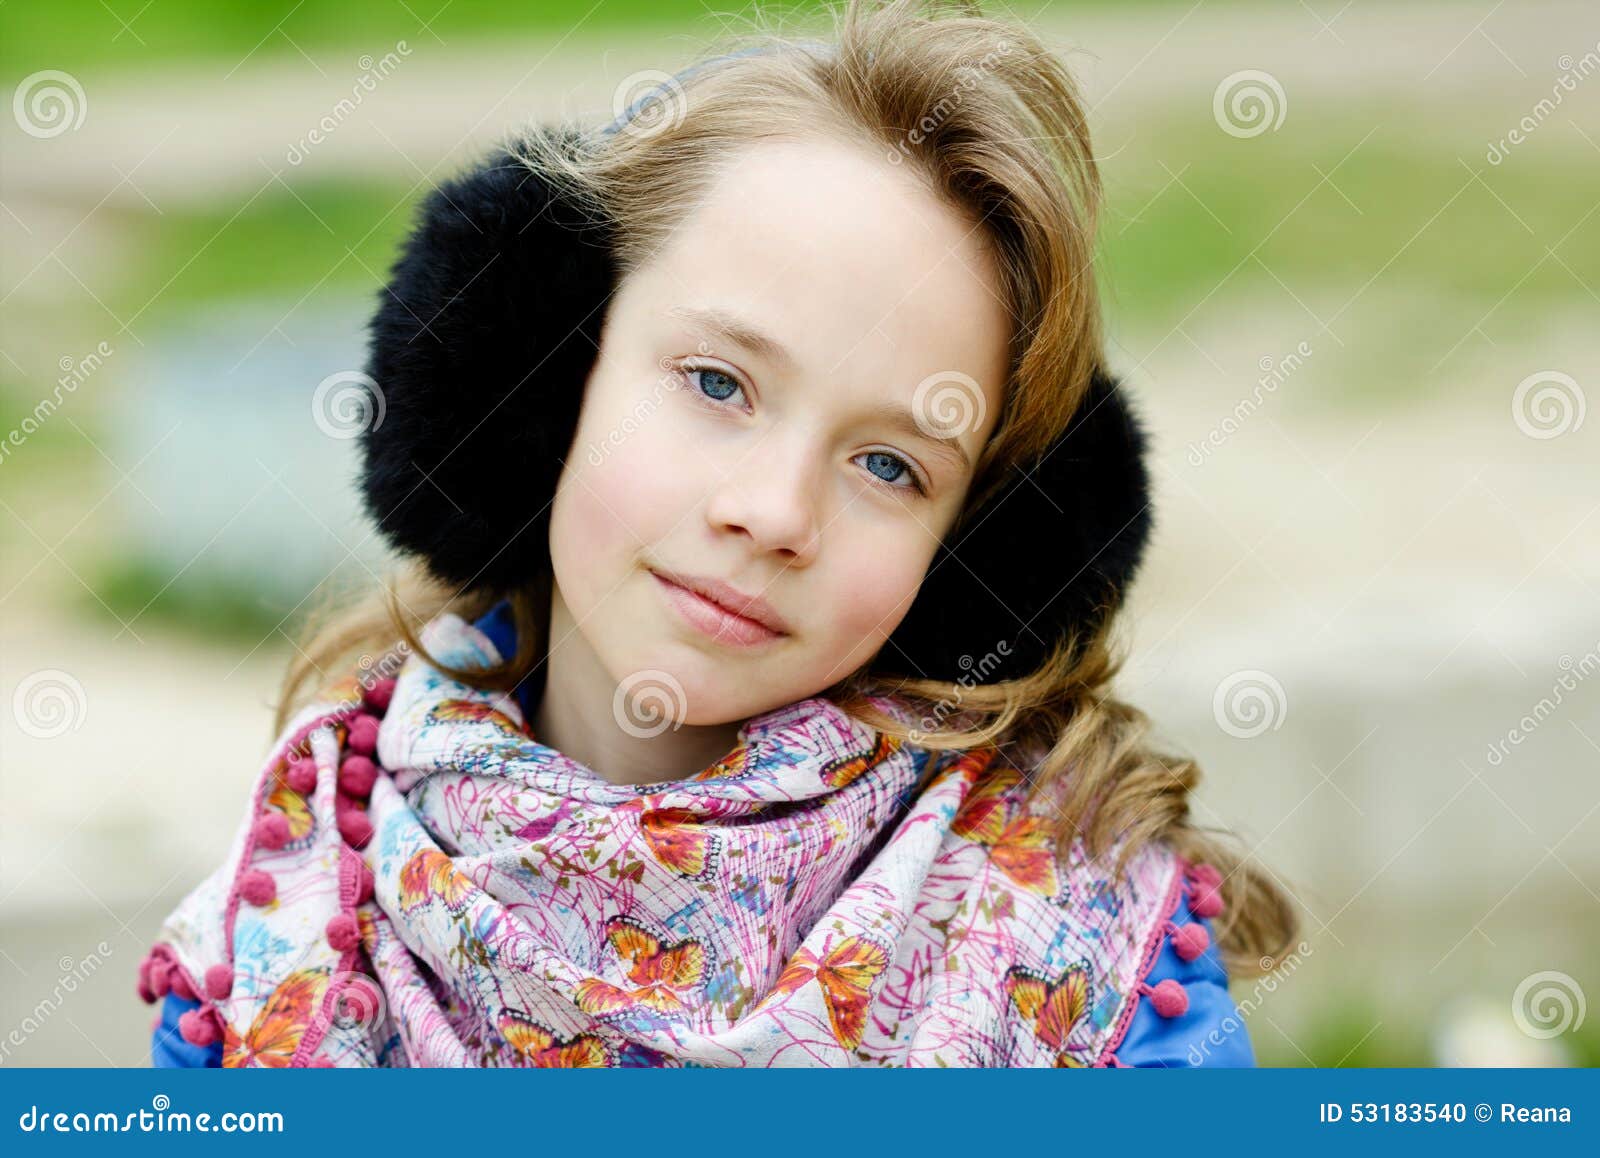 Portrait of blonde girl stock photo. Image of human, childhood - 53183540